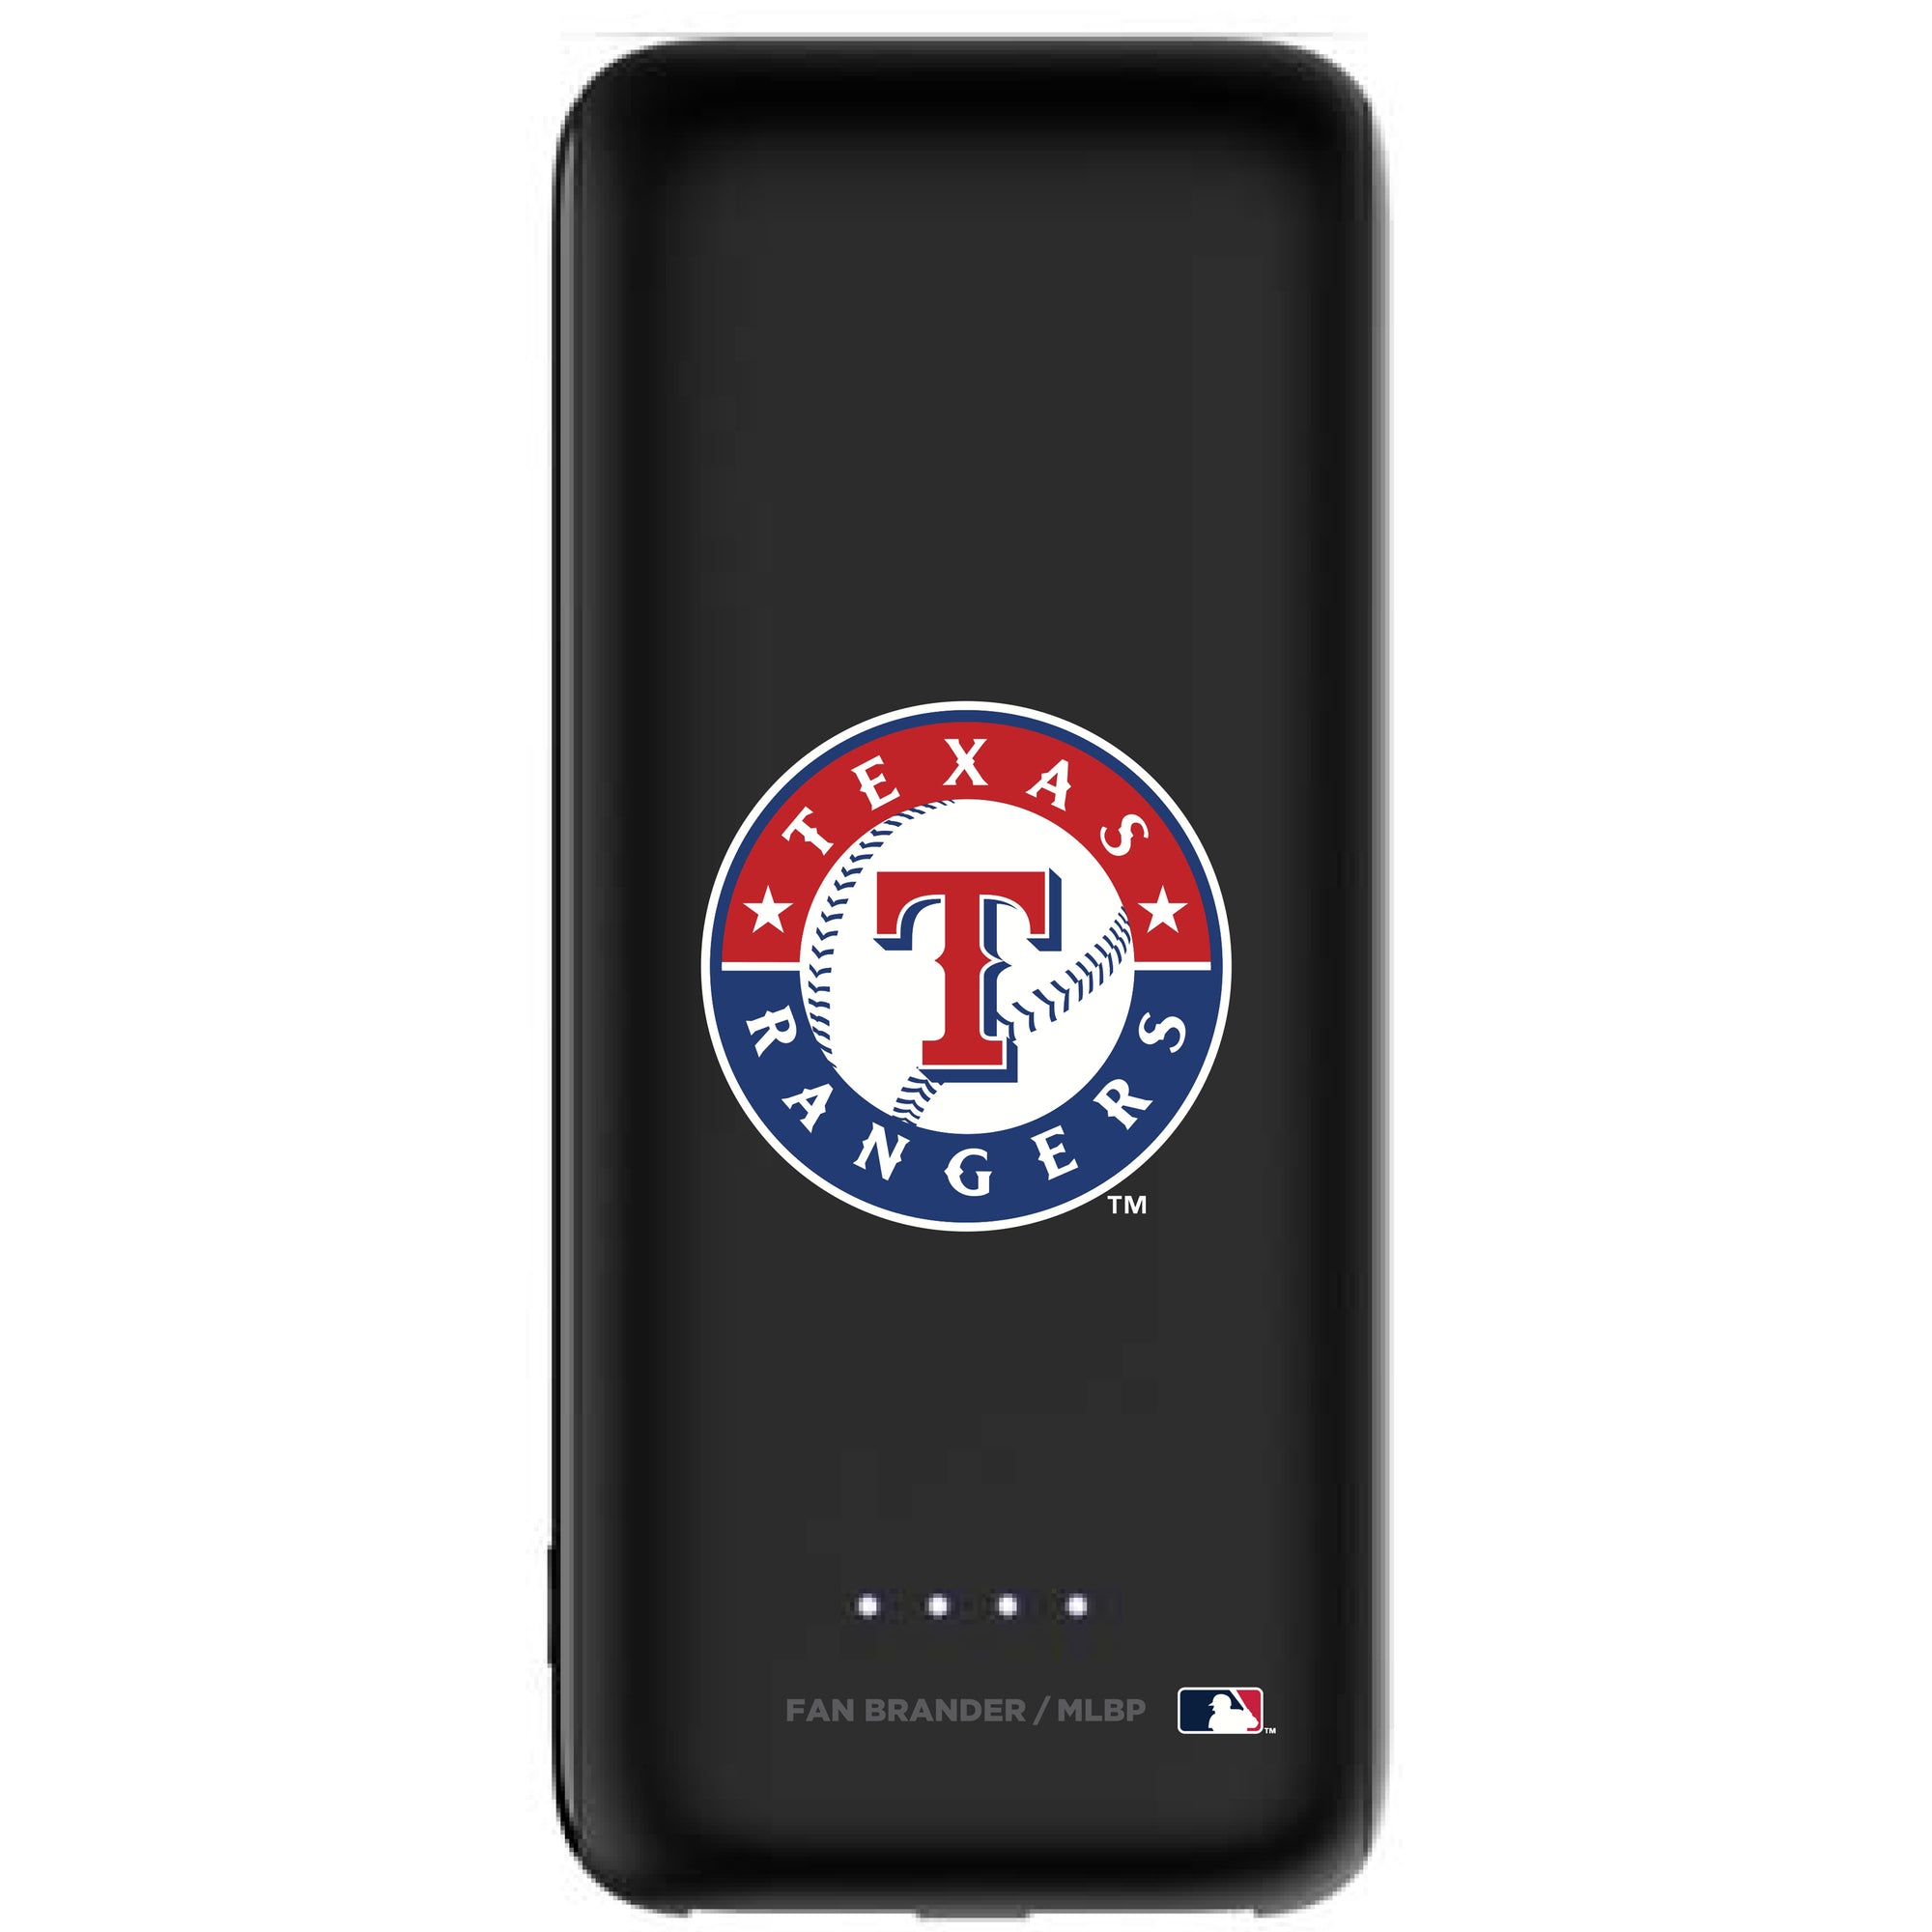 Texas Rangers Power Boost Mini 5,200 mAH